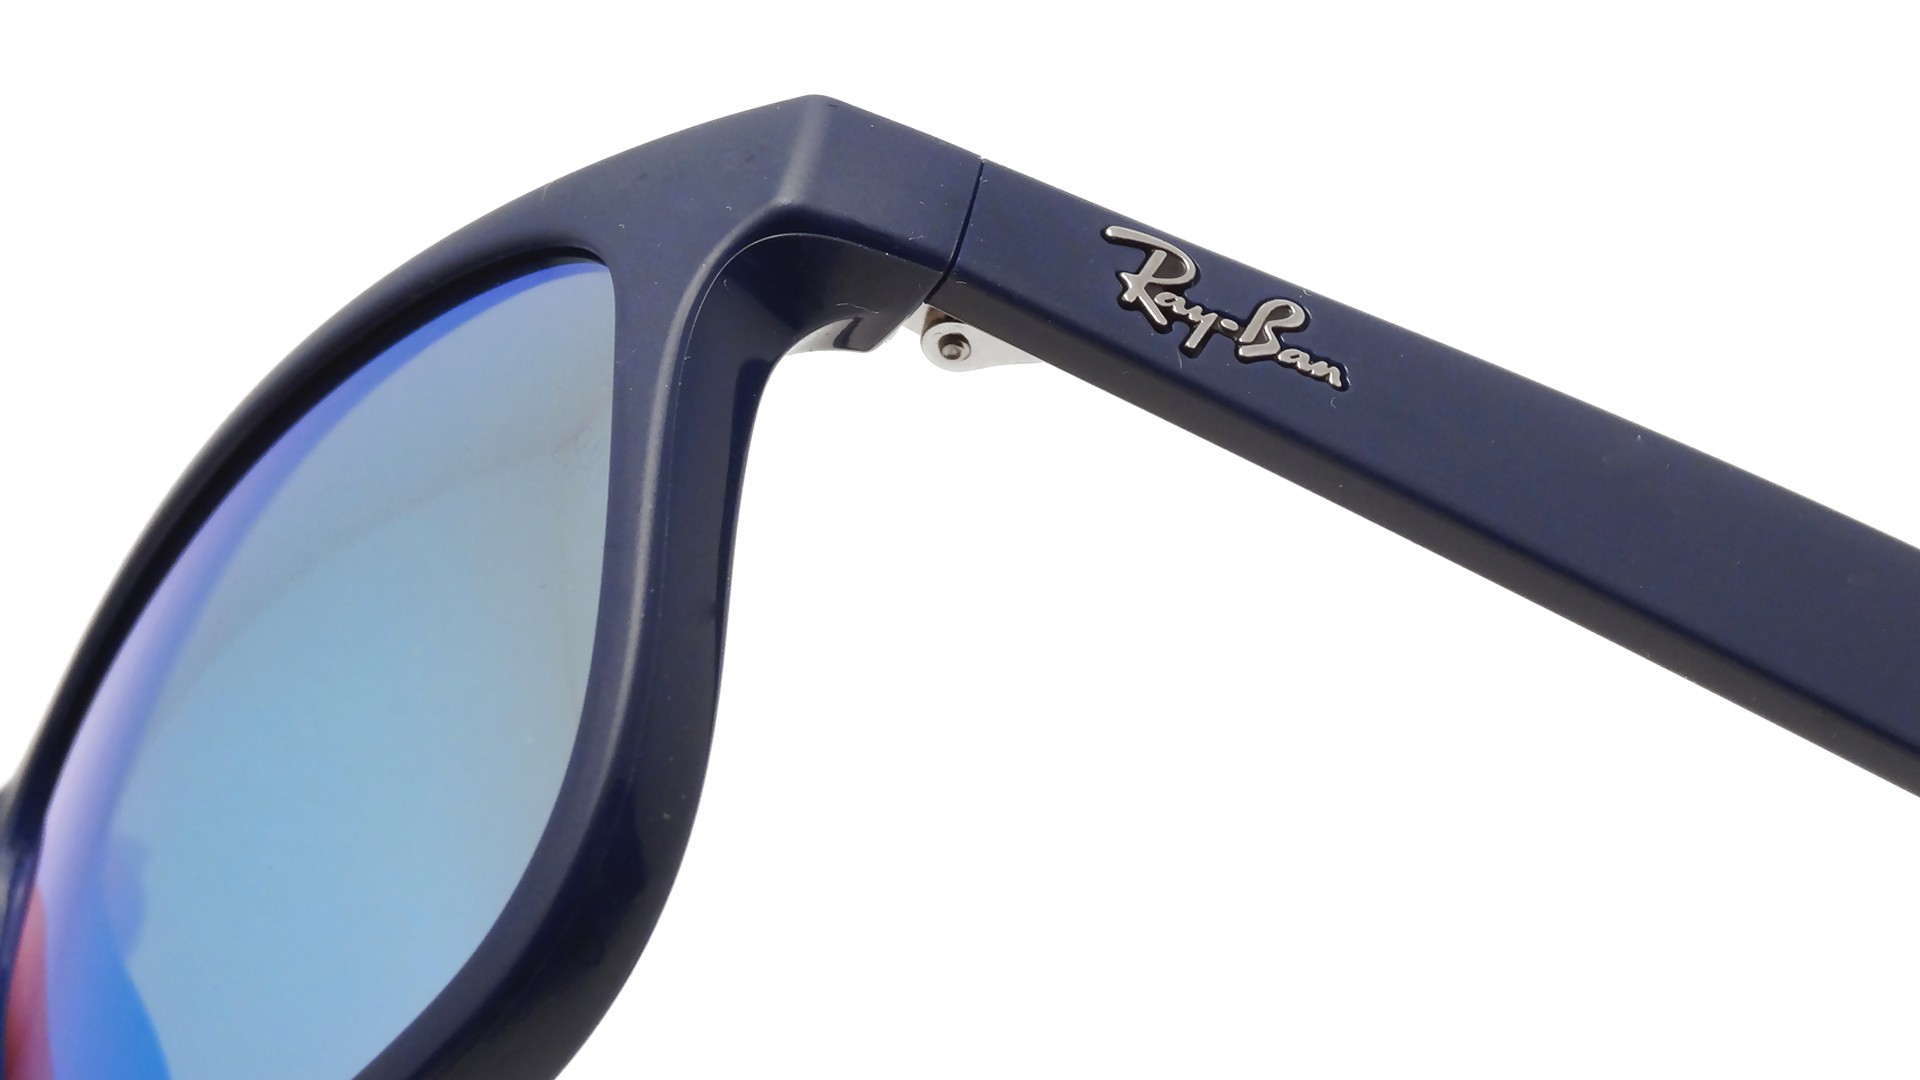 ray ban sunglasses blue frame